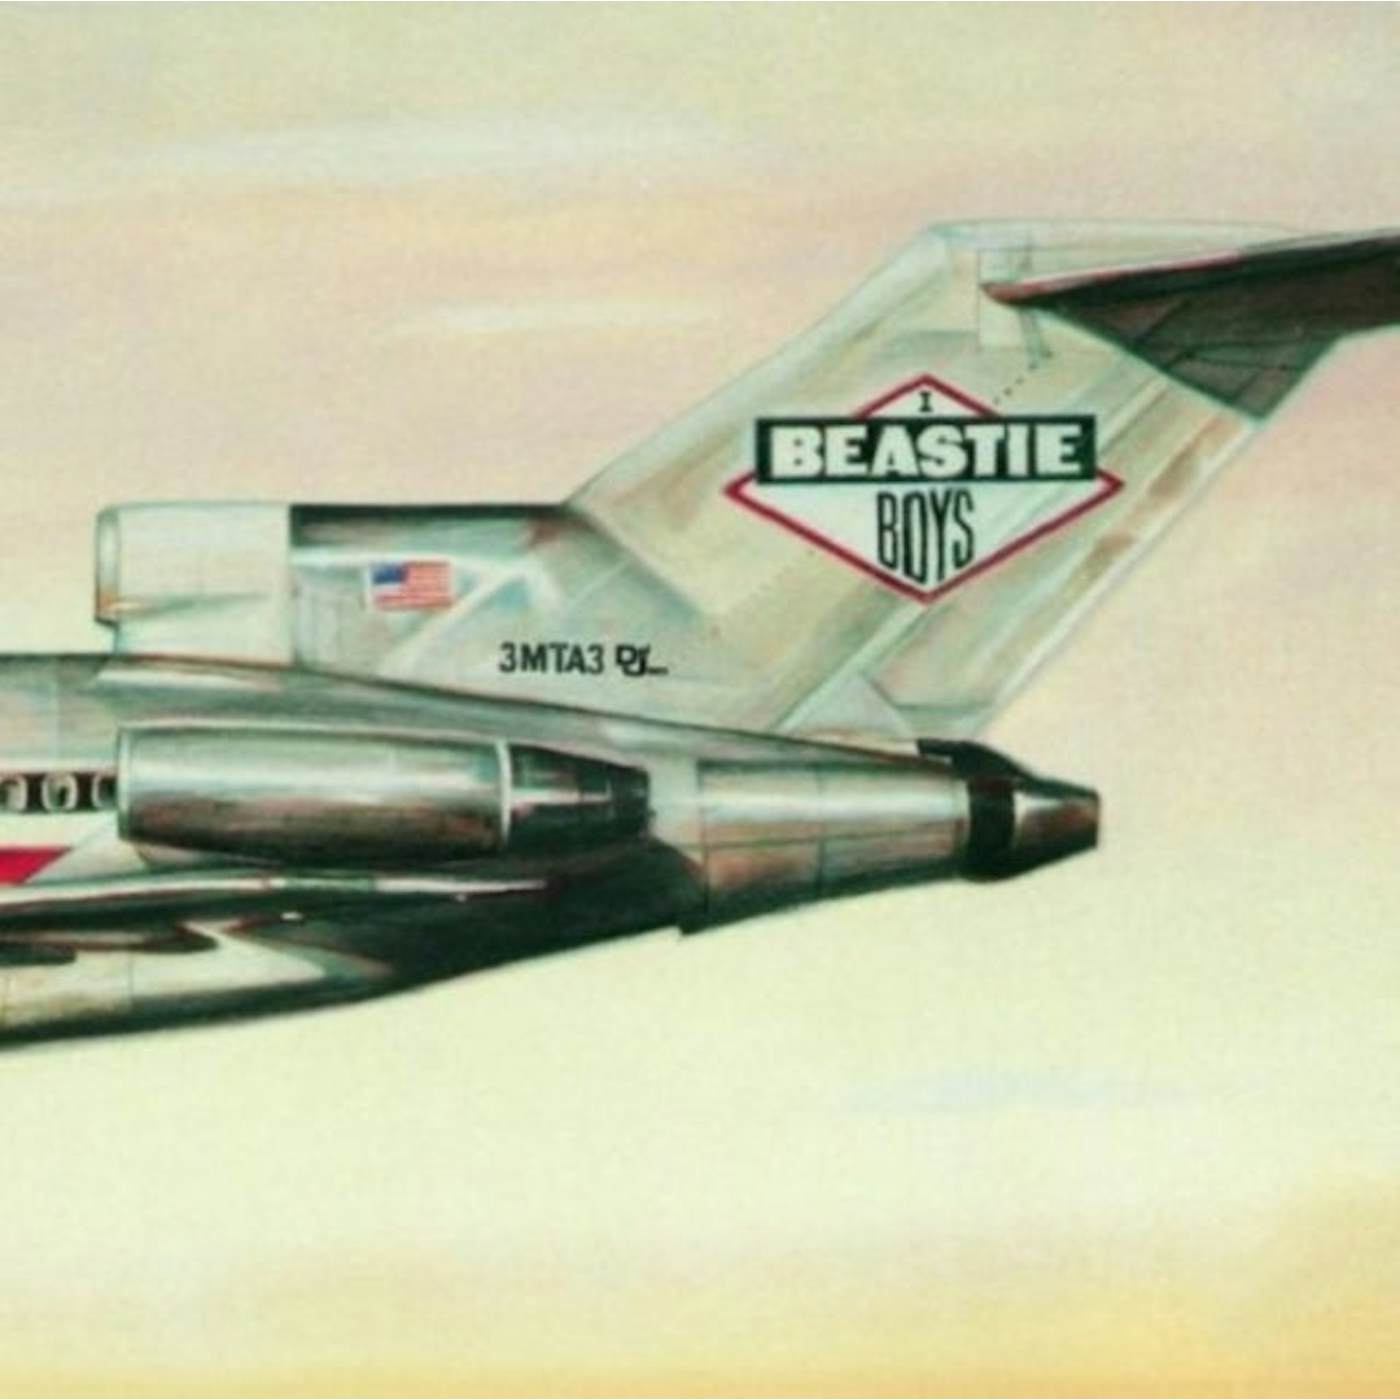 Beastie Boys LP Vinyl Record - Licensed To Ill